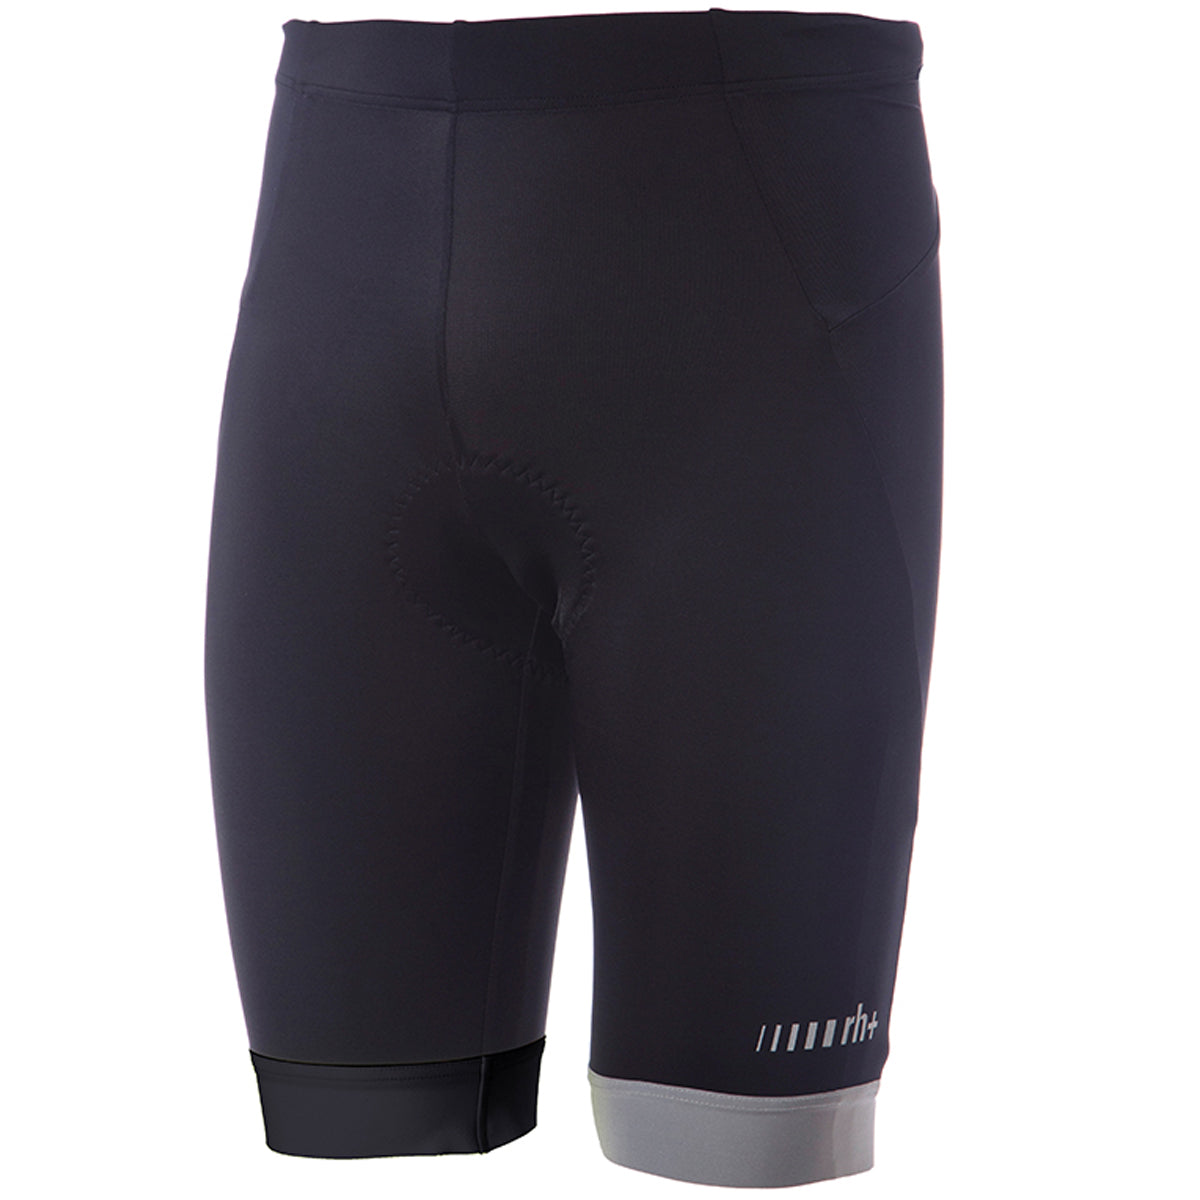 Rh+ Prime shorts - Black reflex – All4cycling